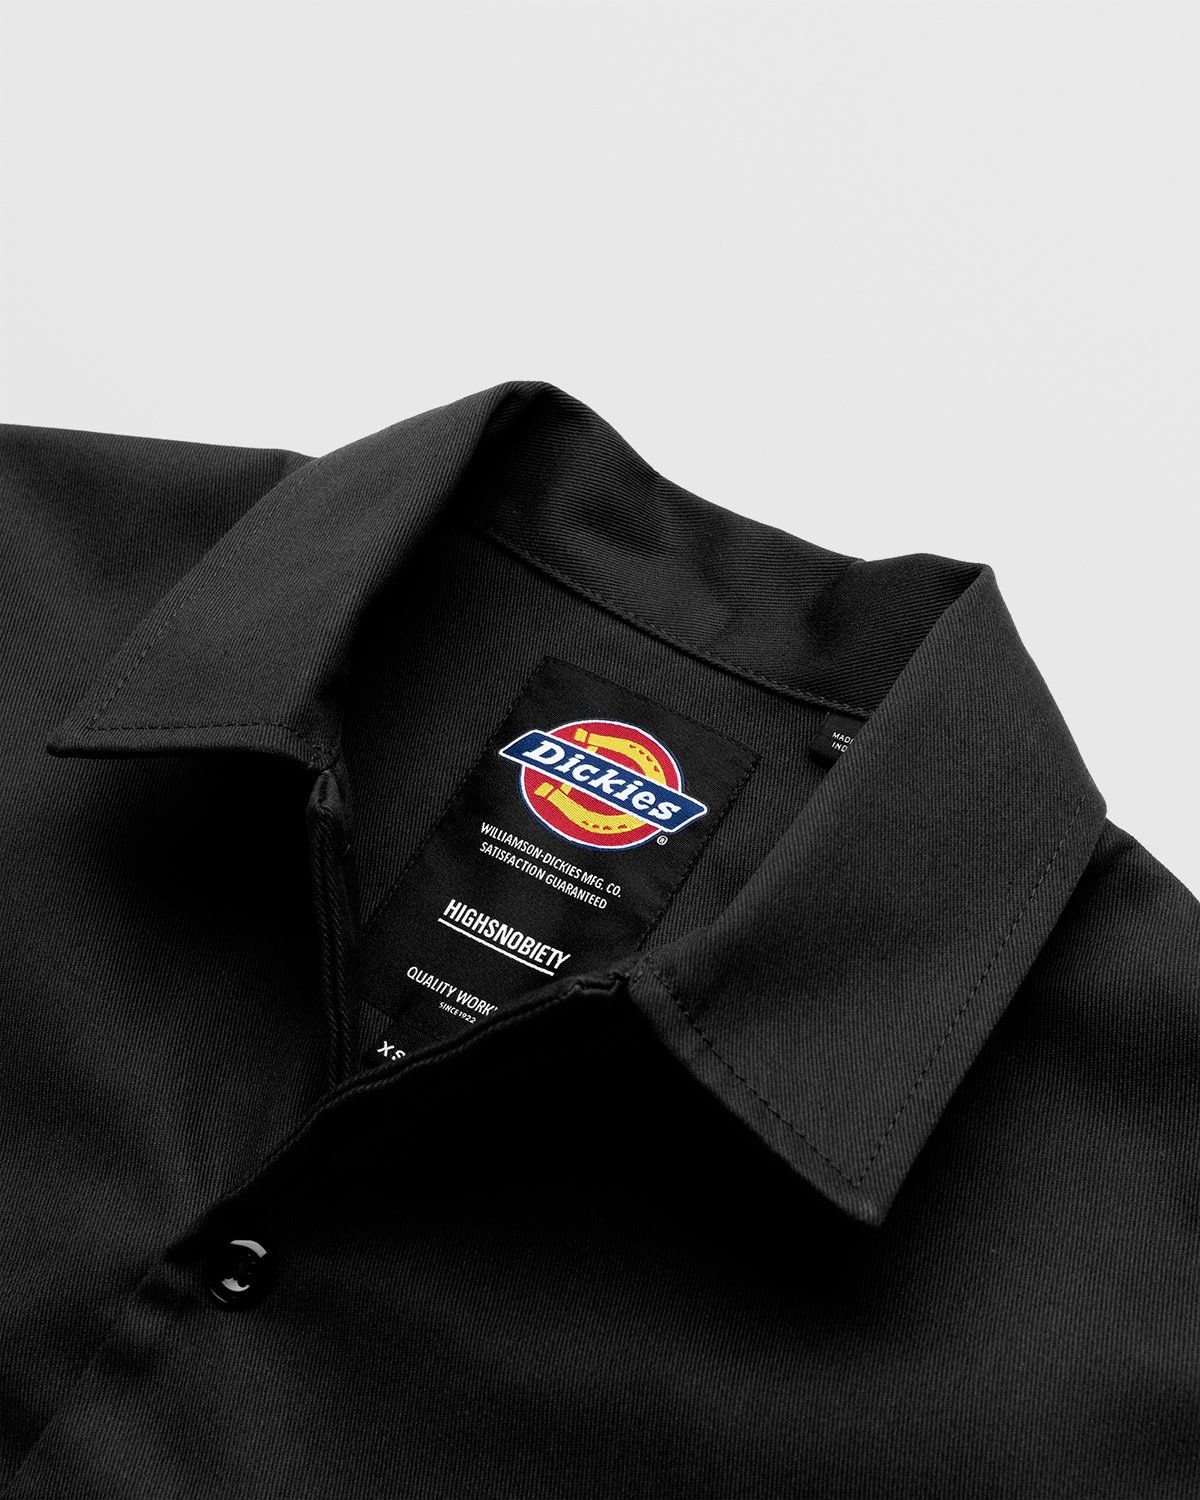 Highsnobiety x Dickies – Service Shirt Black - Longsleeve Shirts - Black - Image 3